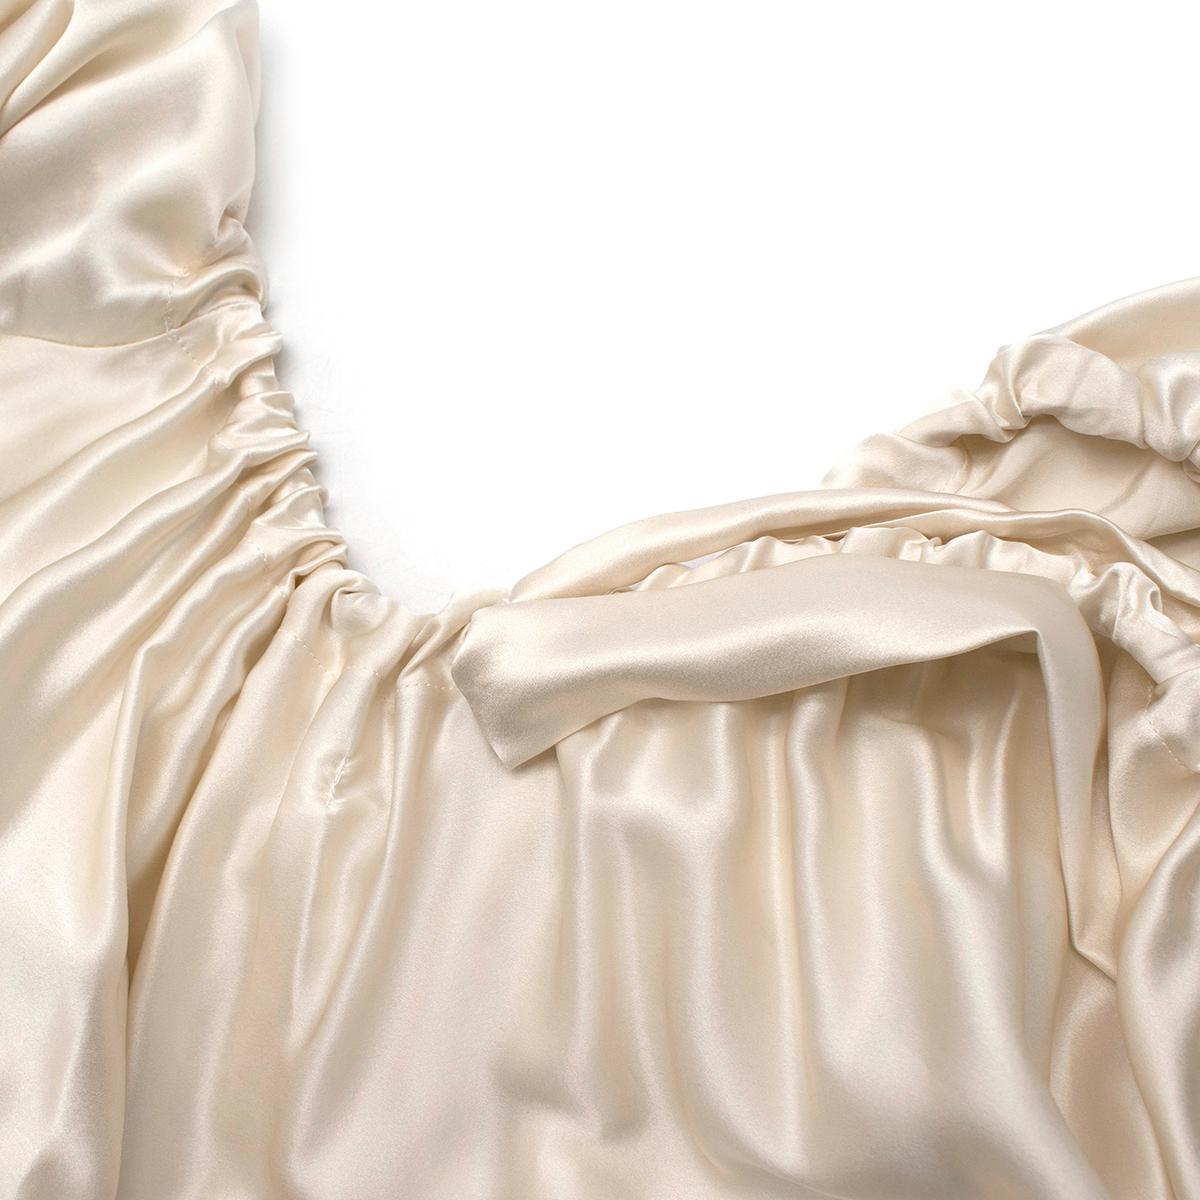 Henriette Von Gruenberg Bettina Silk Satin Low Back Draped Gown In Excellent Condition For Sale In London, GB